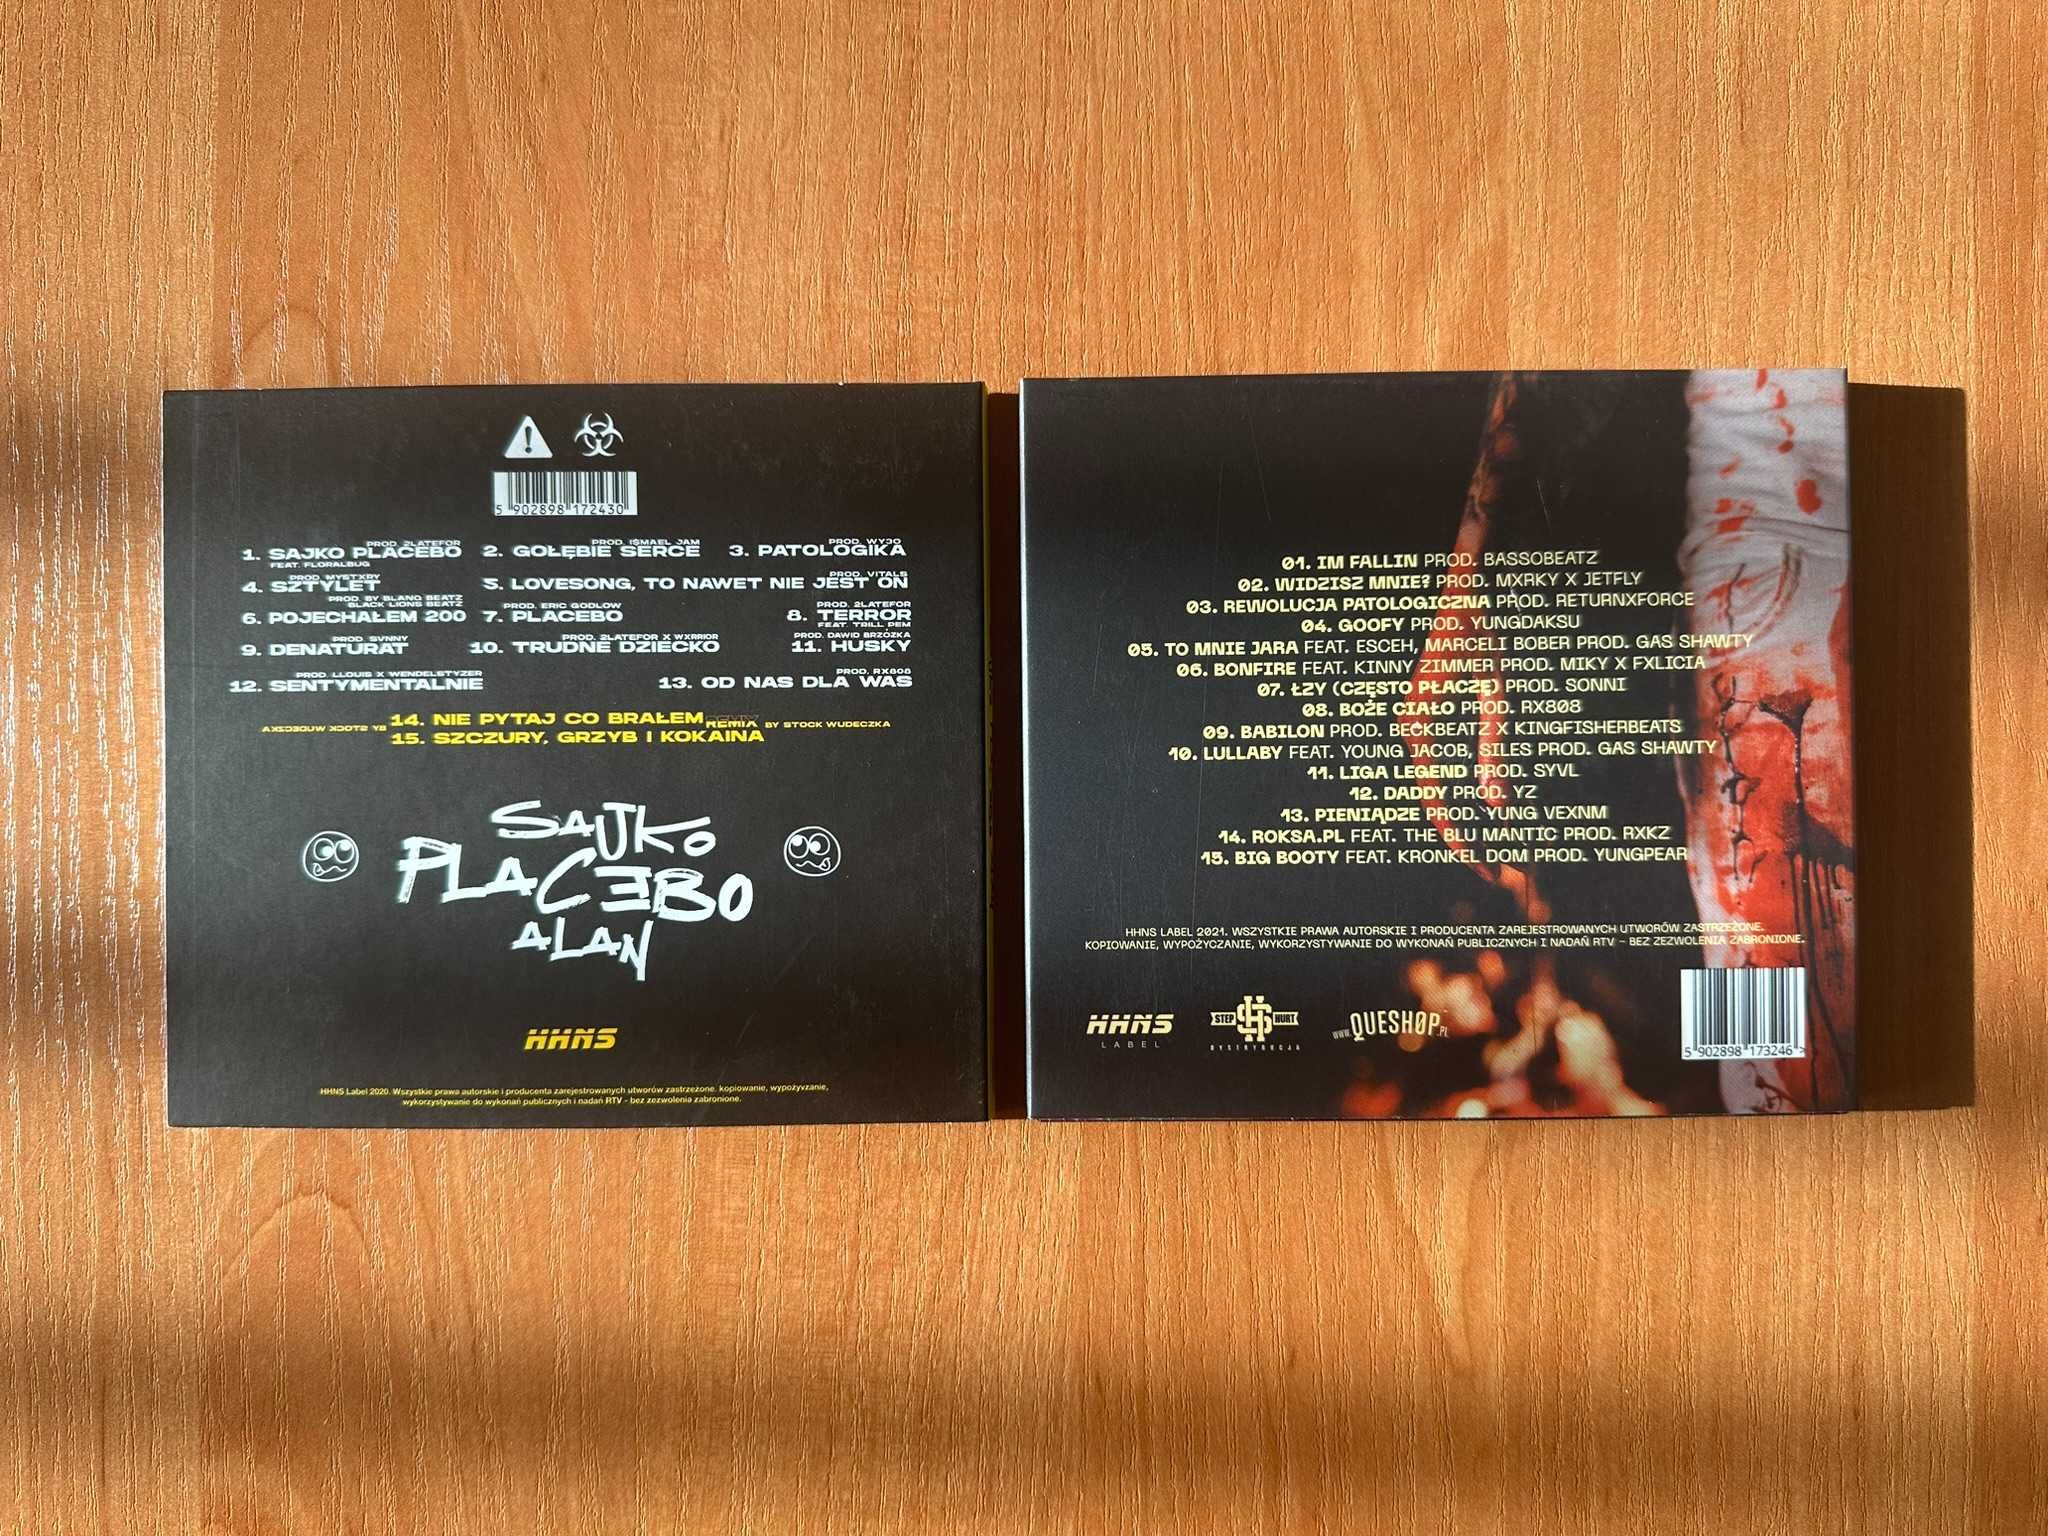 Alan 2CD - Sajko Placebo / Bonfire